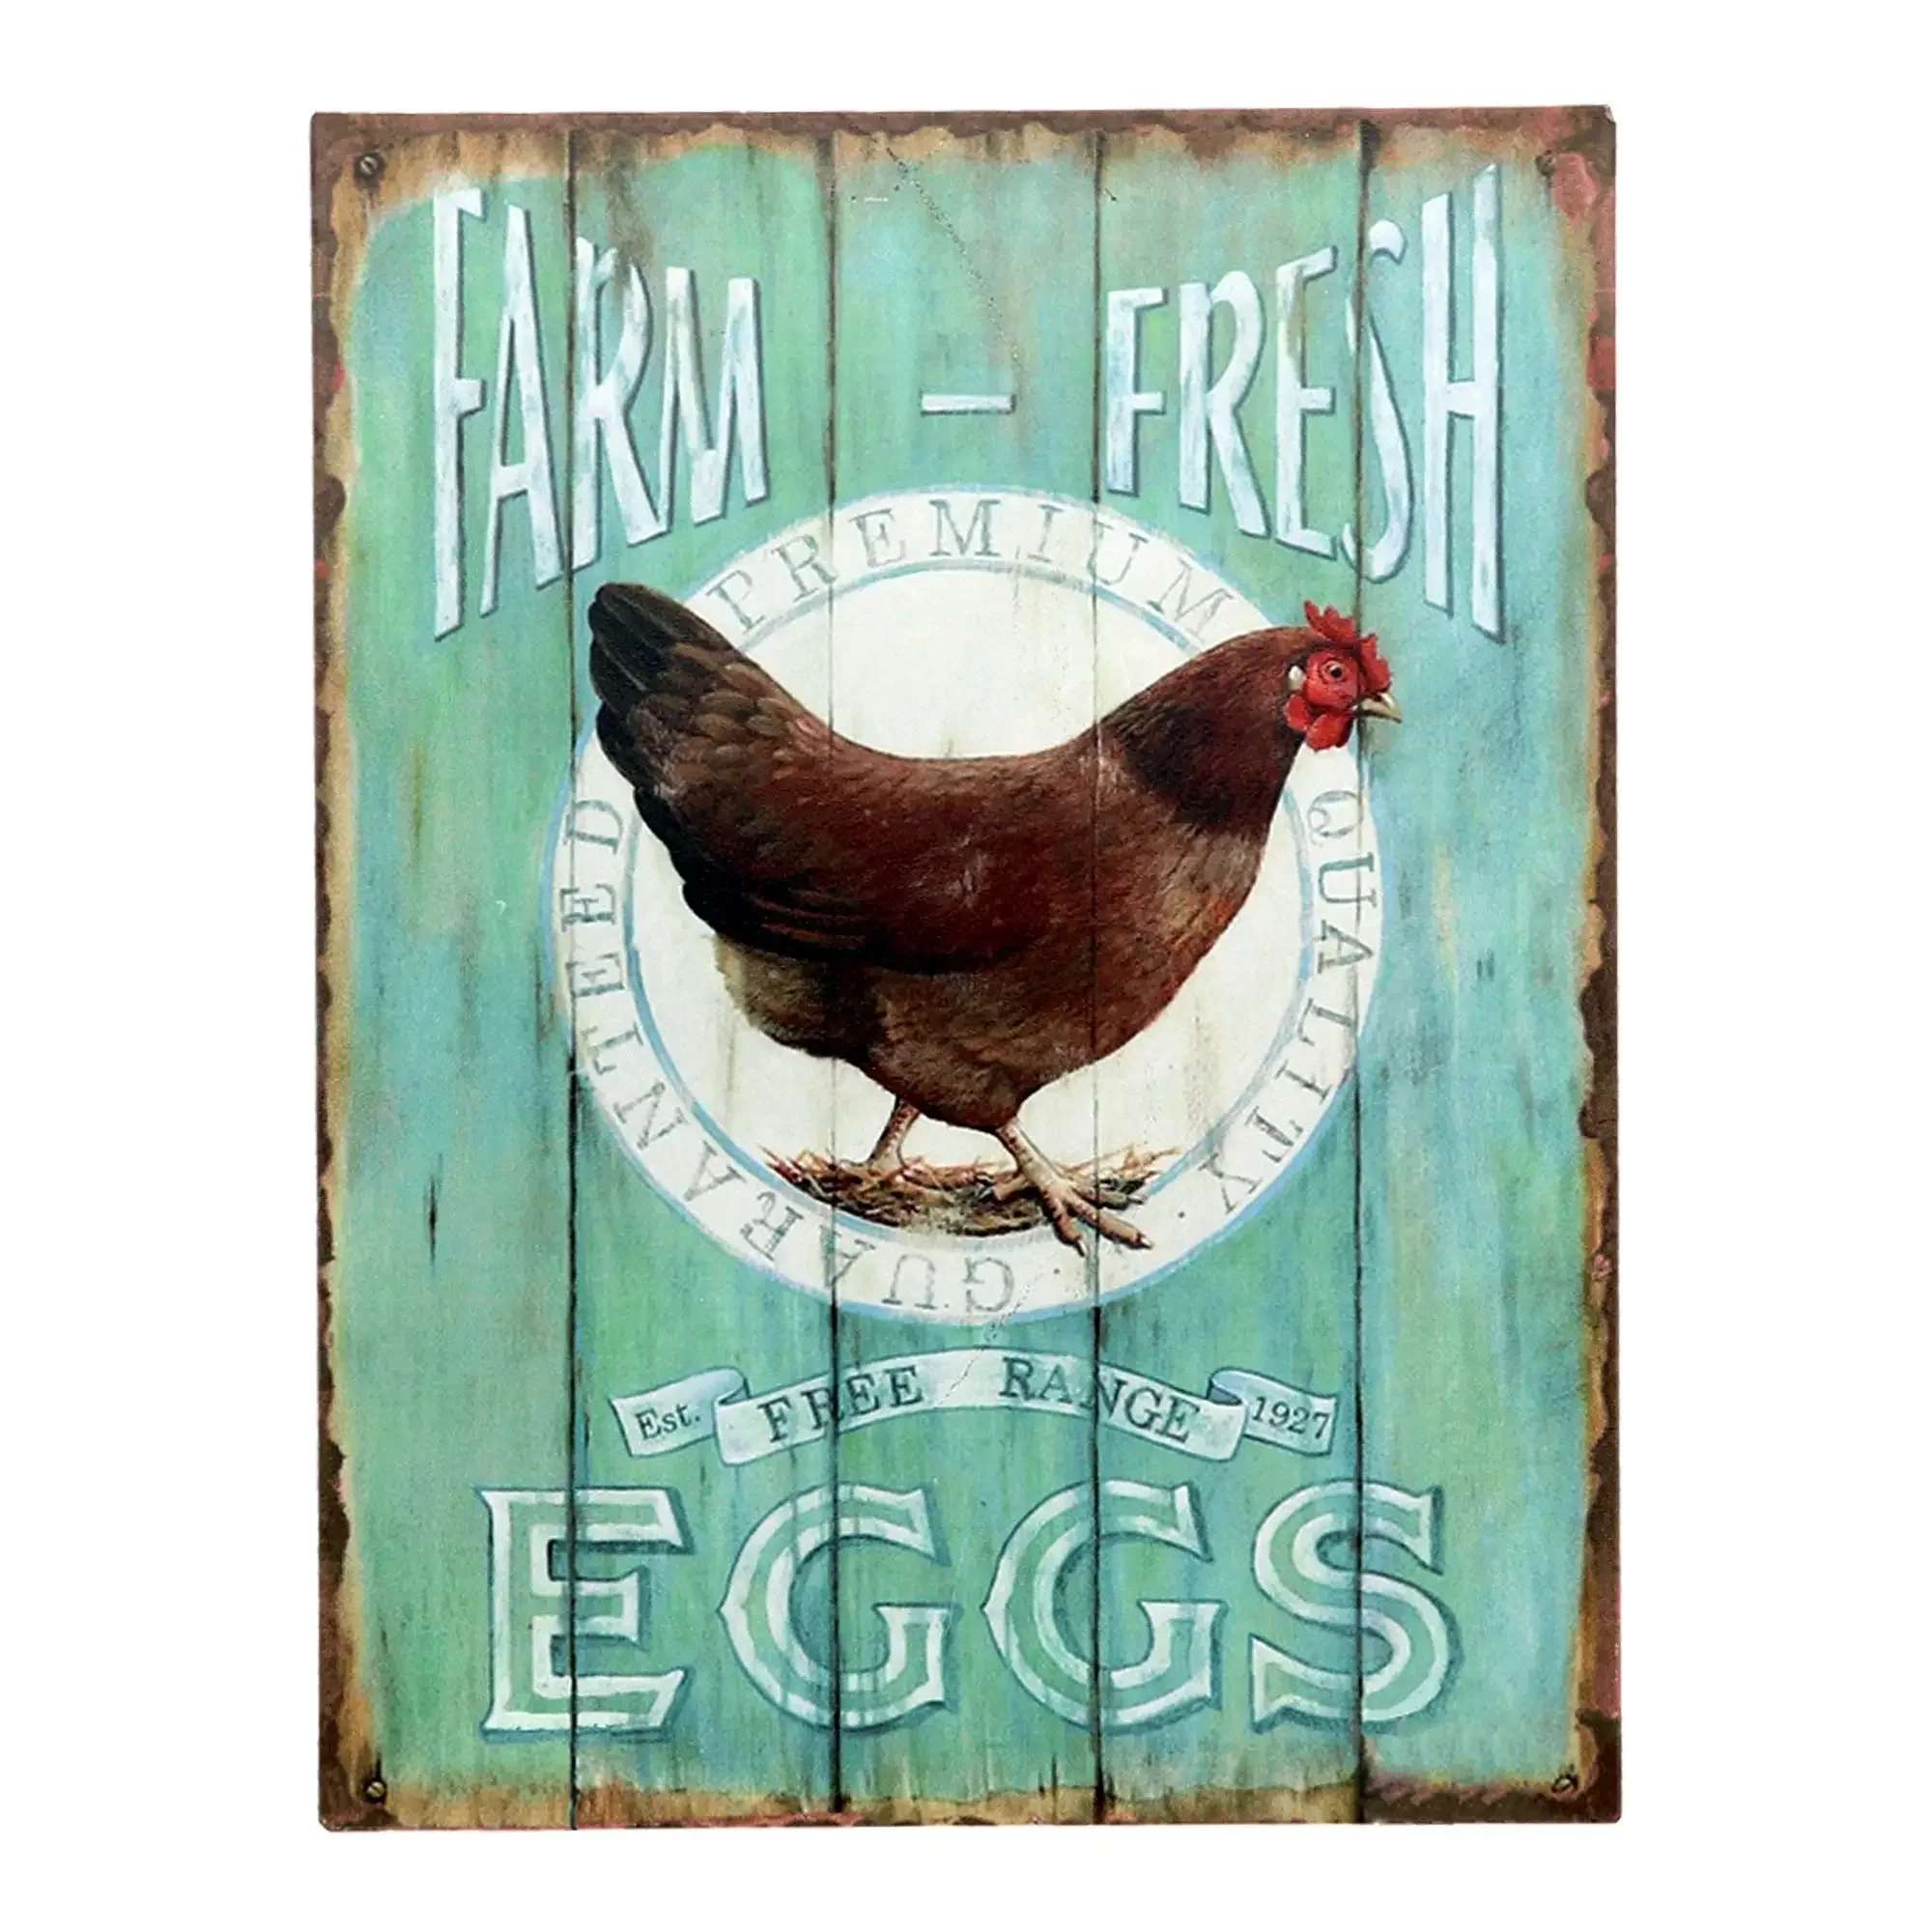 

Farm Fresh Free Range Eggs' Retro Vintage Metal Tin Bar Sign, Decorative Wall Art Signage Primitive Farmhouse Country Home Décor